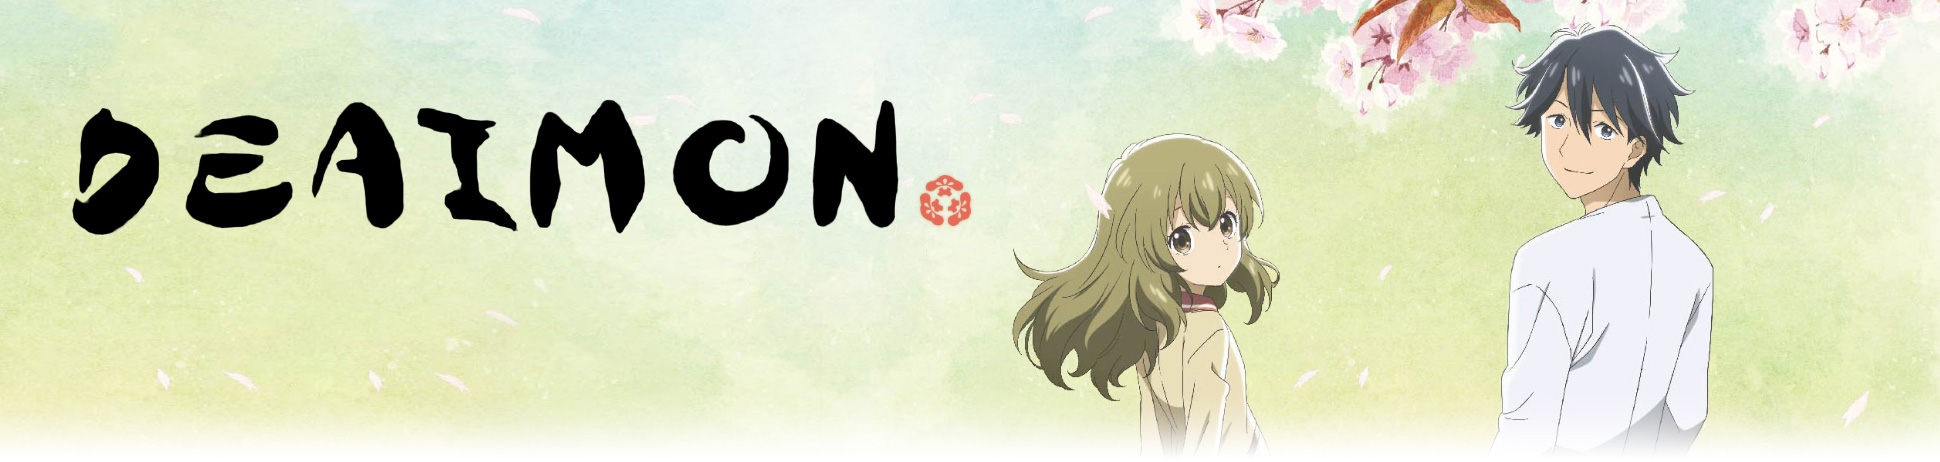 Deaimon: Recipe for Happiness - Anime Trailer 